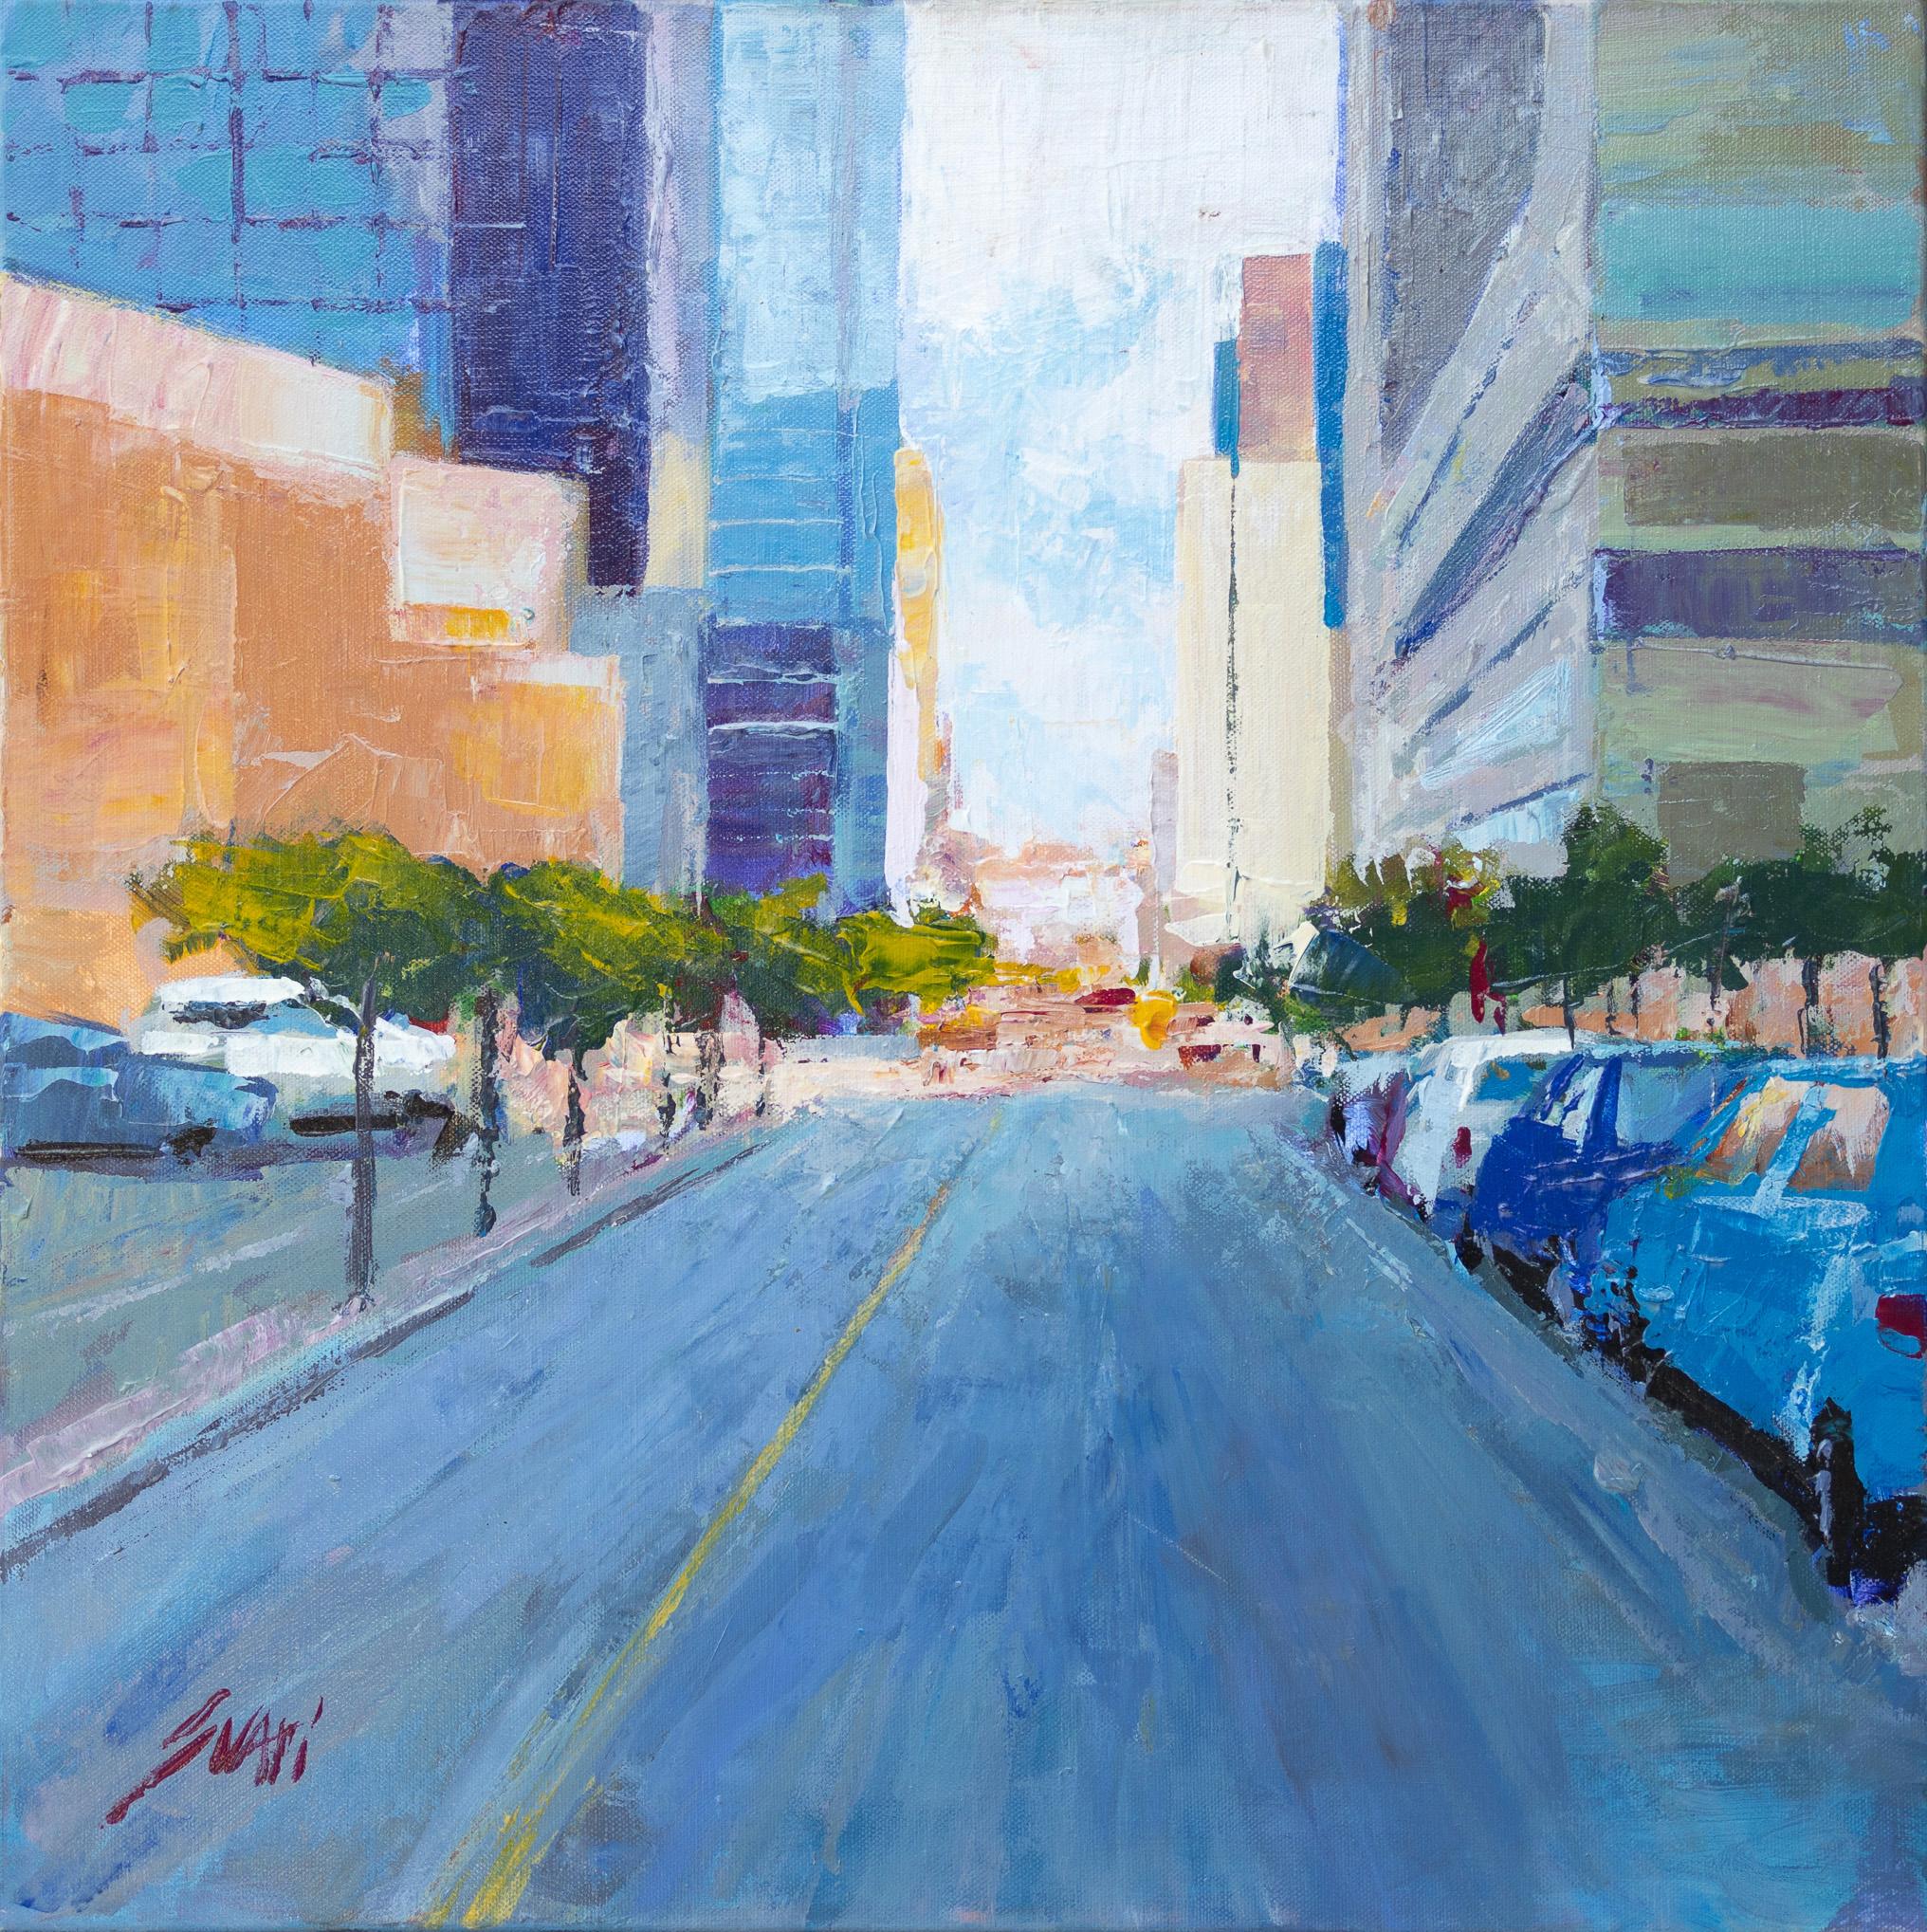 Pep Suari Landscape Painting - "Congress Avenue" Austin, Texas Urban Cityscape Street Scene